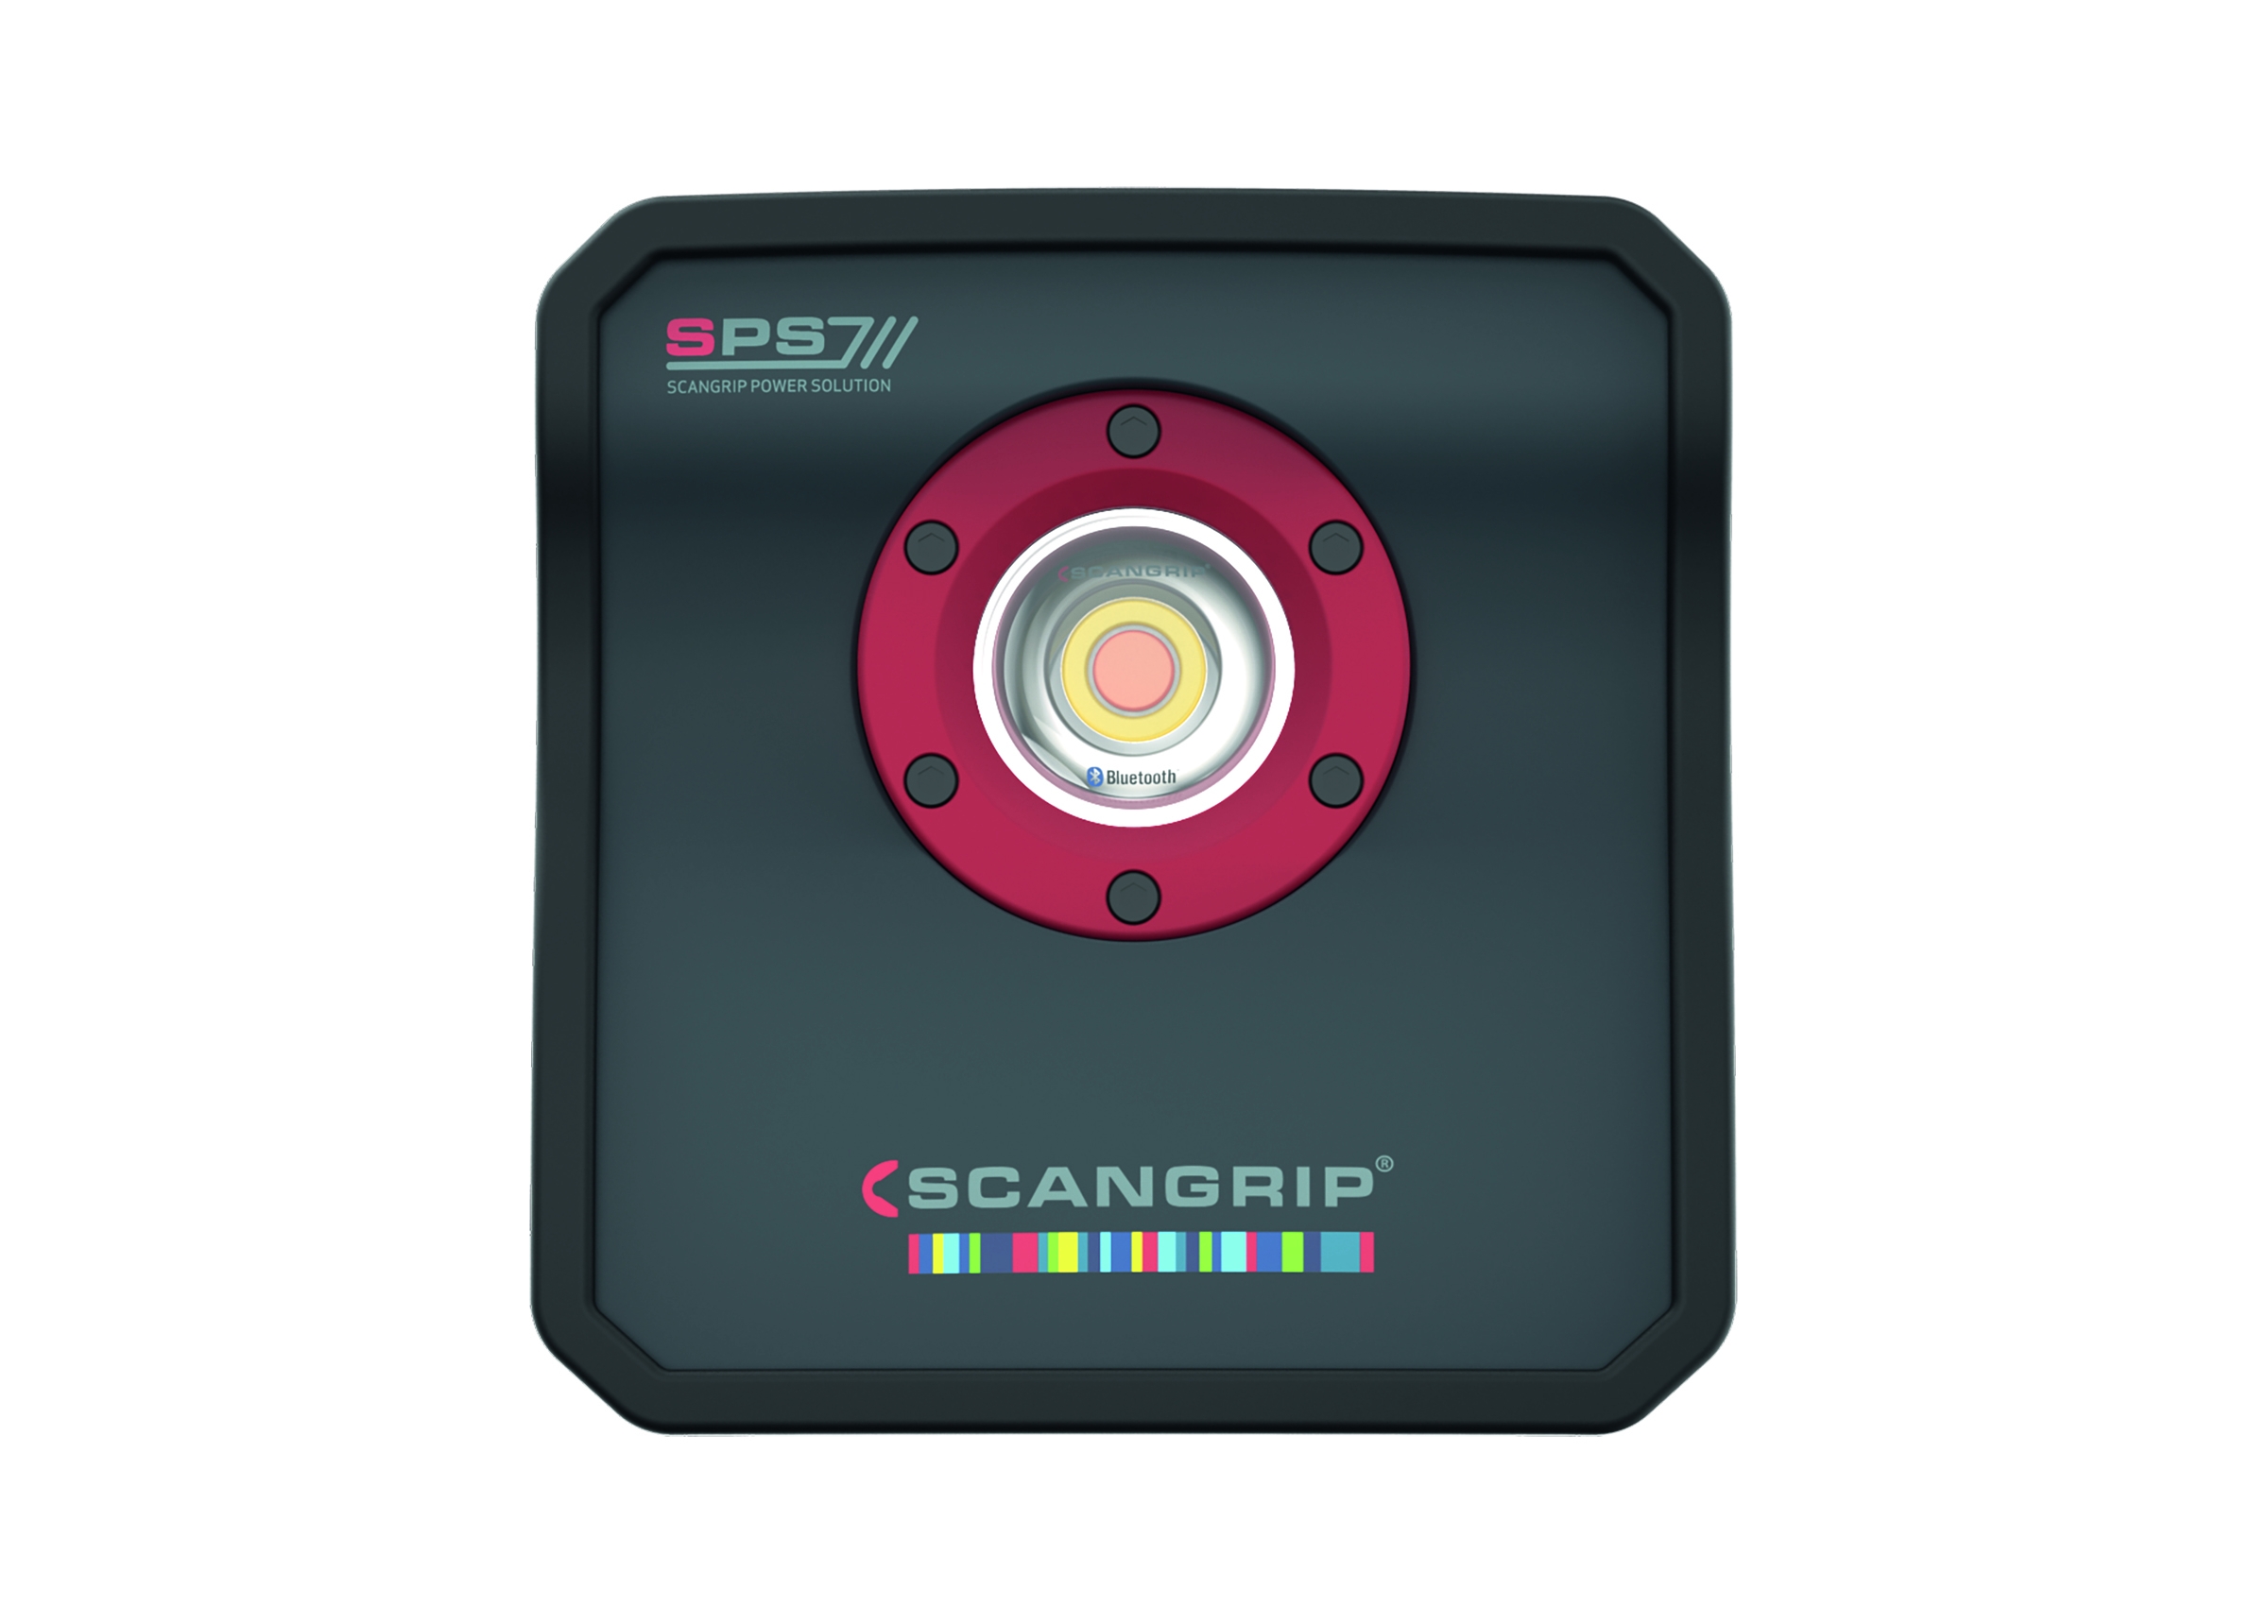 Image of Scangrip 03.5653 Multimatch 3 – akumulatora lampa inspekcyjna, 5 barw światła